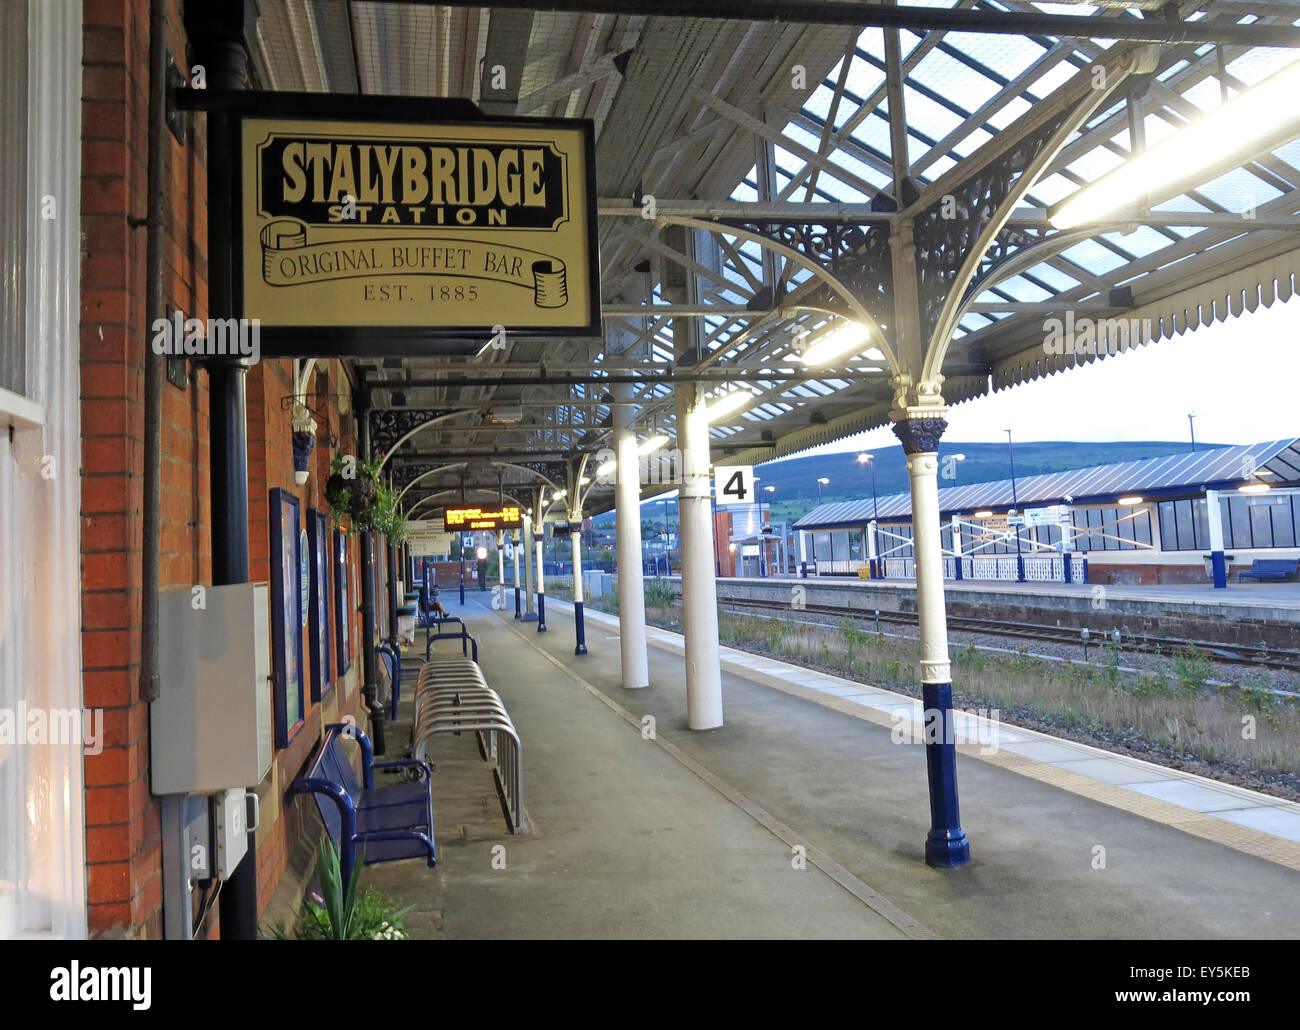 Stalybridge Gare Buffet Original bar,est 1885, Transpennine aletrail, Tameside, Greater Manchester, Angleterre, RU Banque D'Images